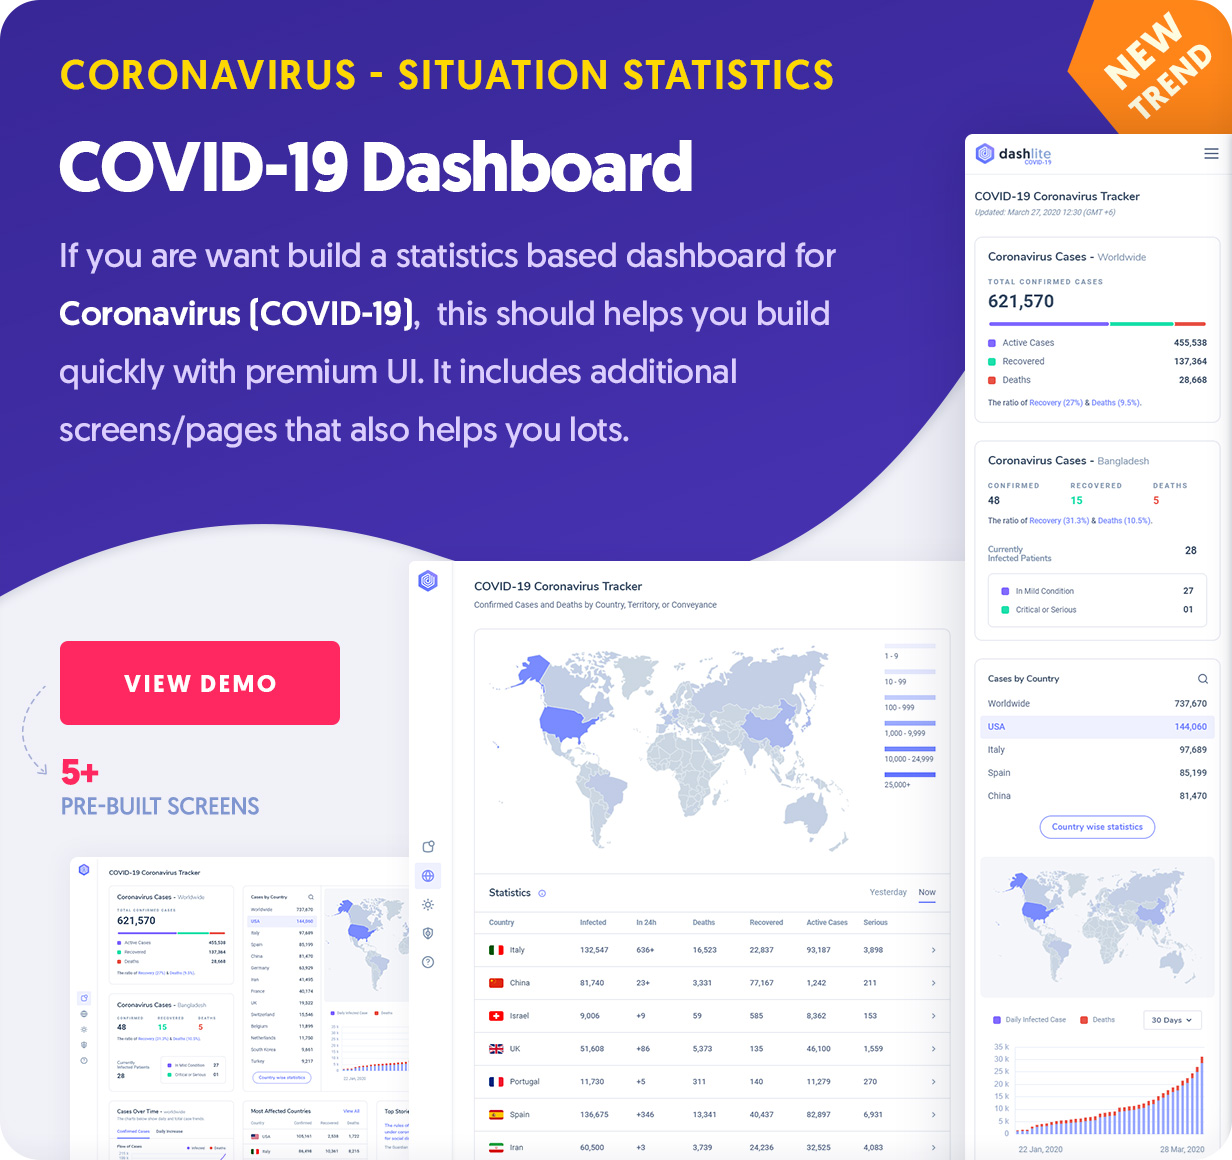 DashLite - Coronavirus (COVID-19) Dashboard for Situation Tracker